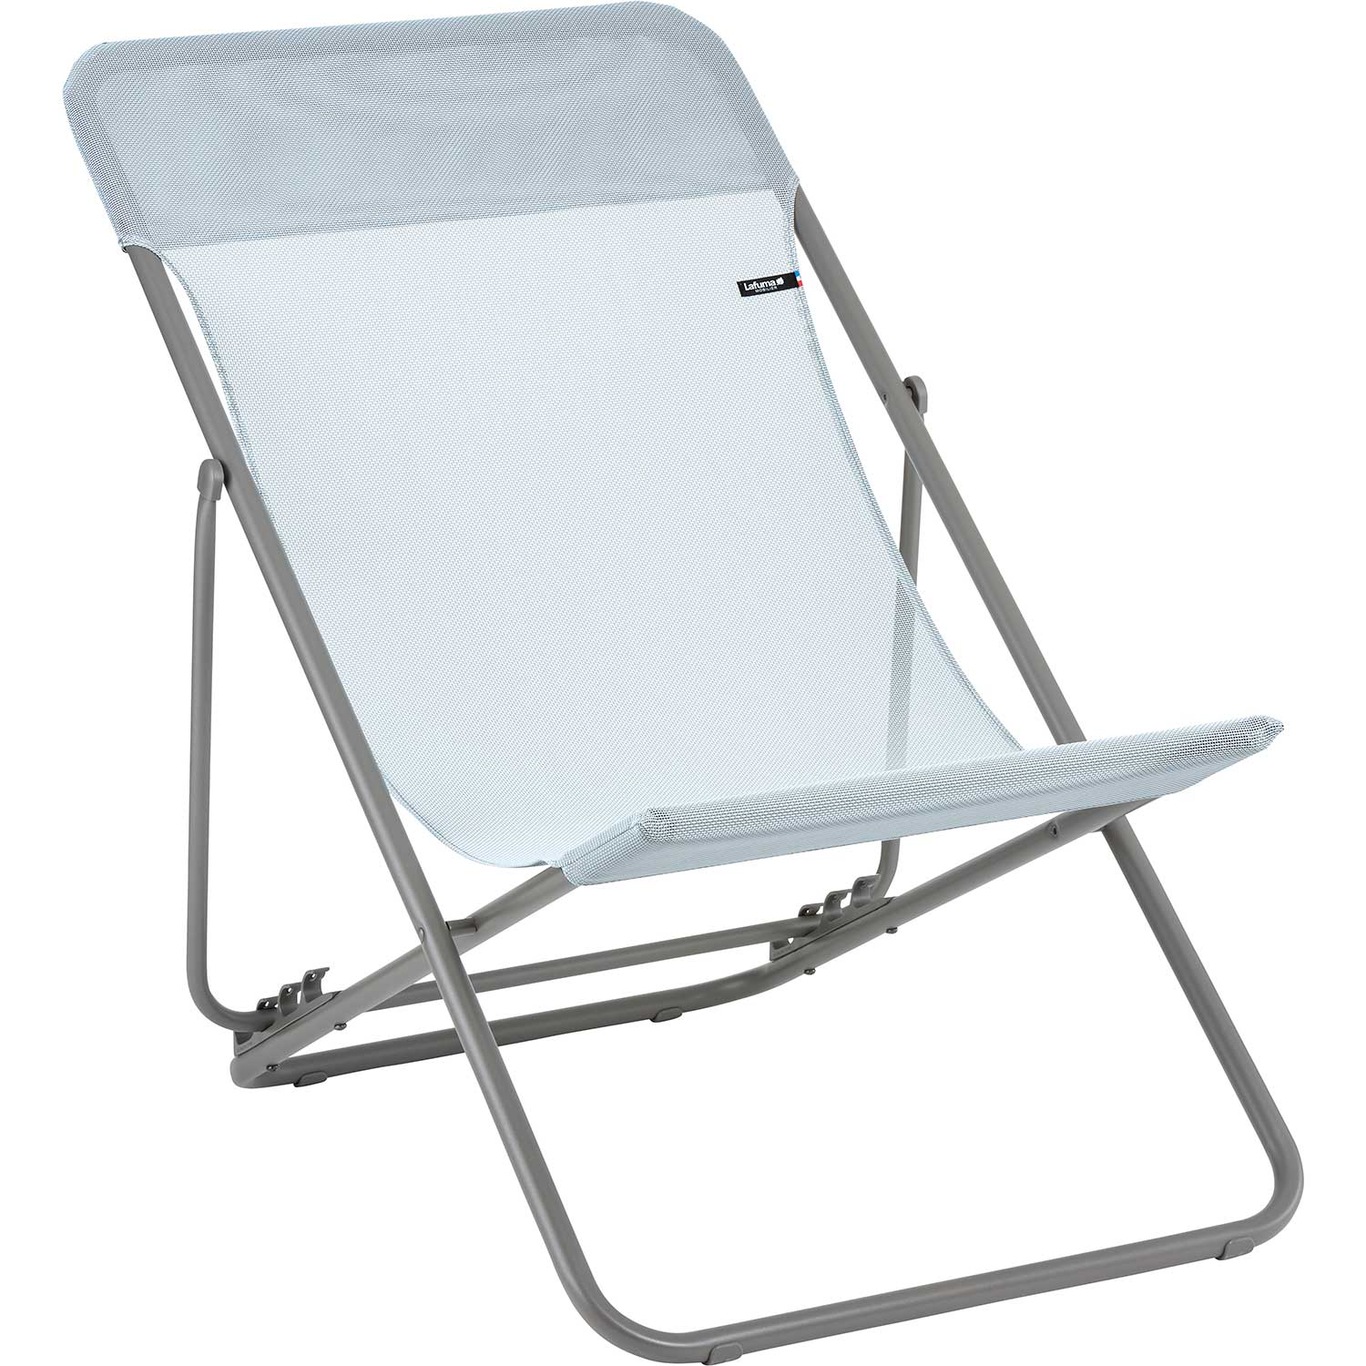 Maxi Transat Batyline® Iso Deck Chair Liggestol, Blue Ciel